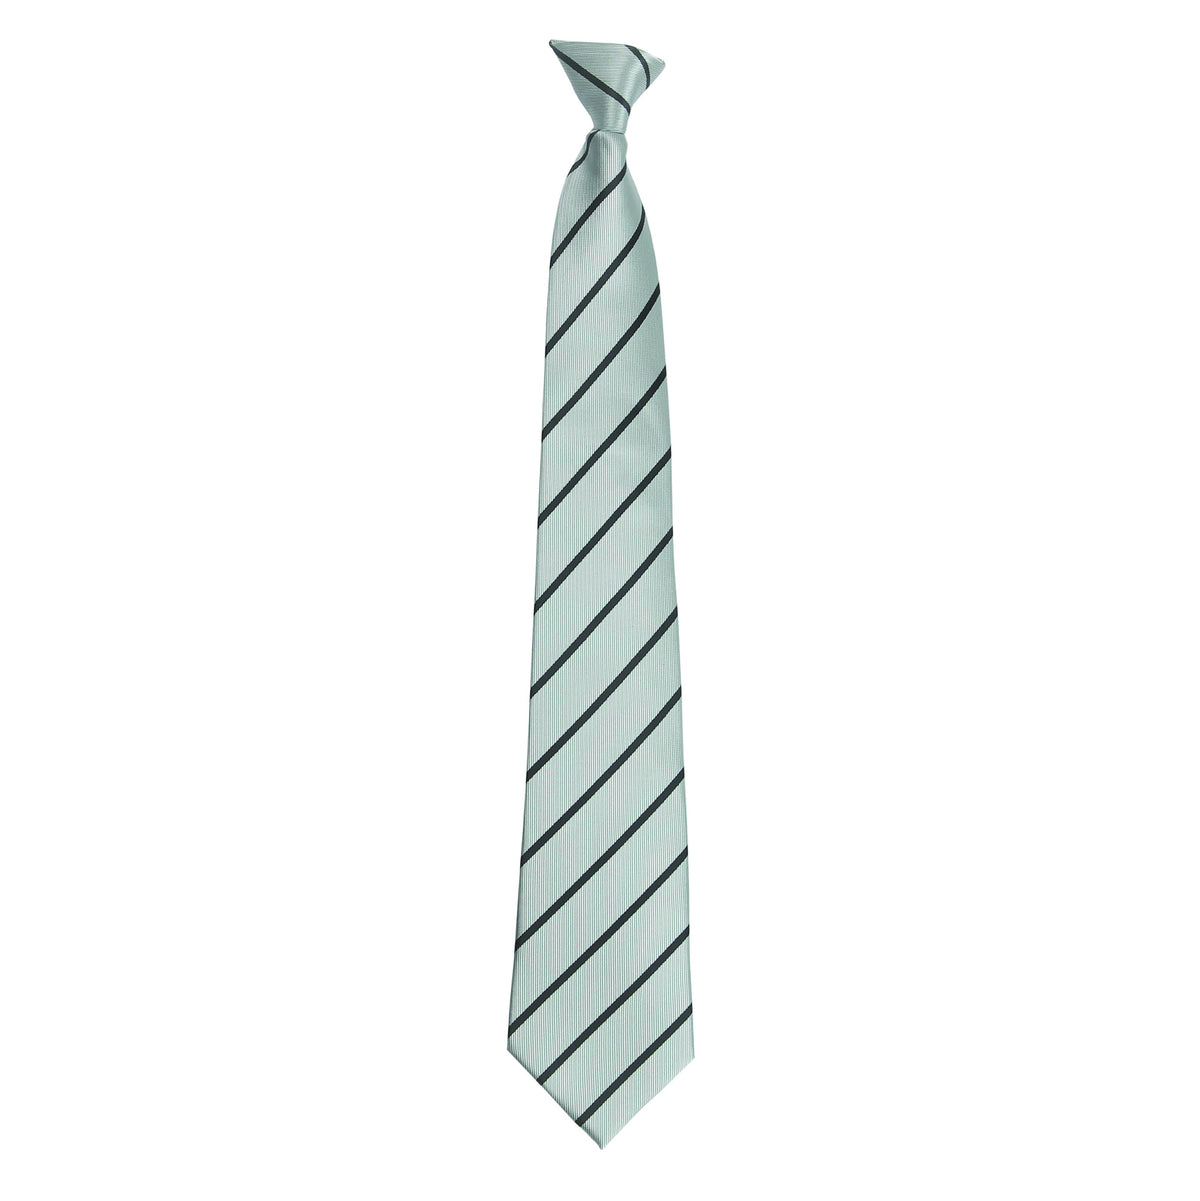 Premier Striped Ties - peterdrew.com
 - 5